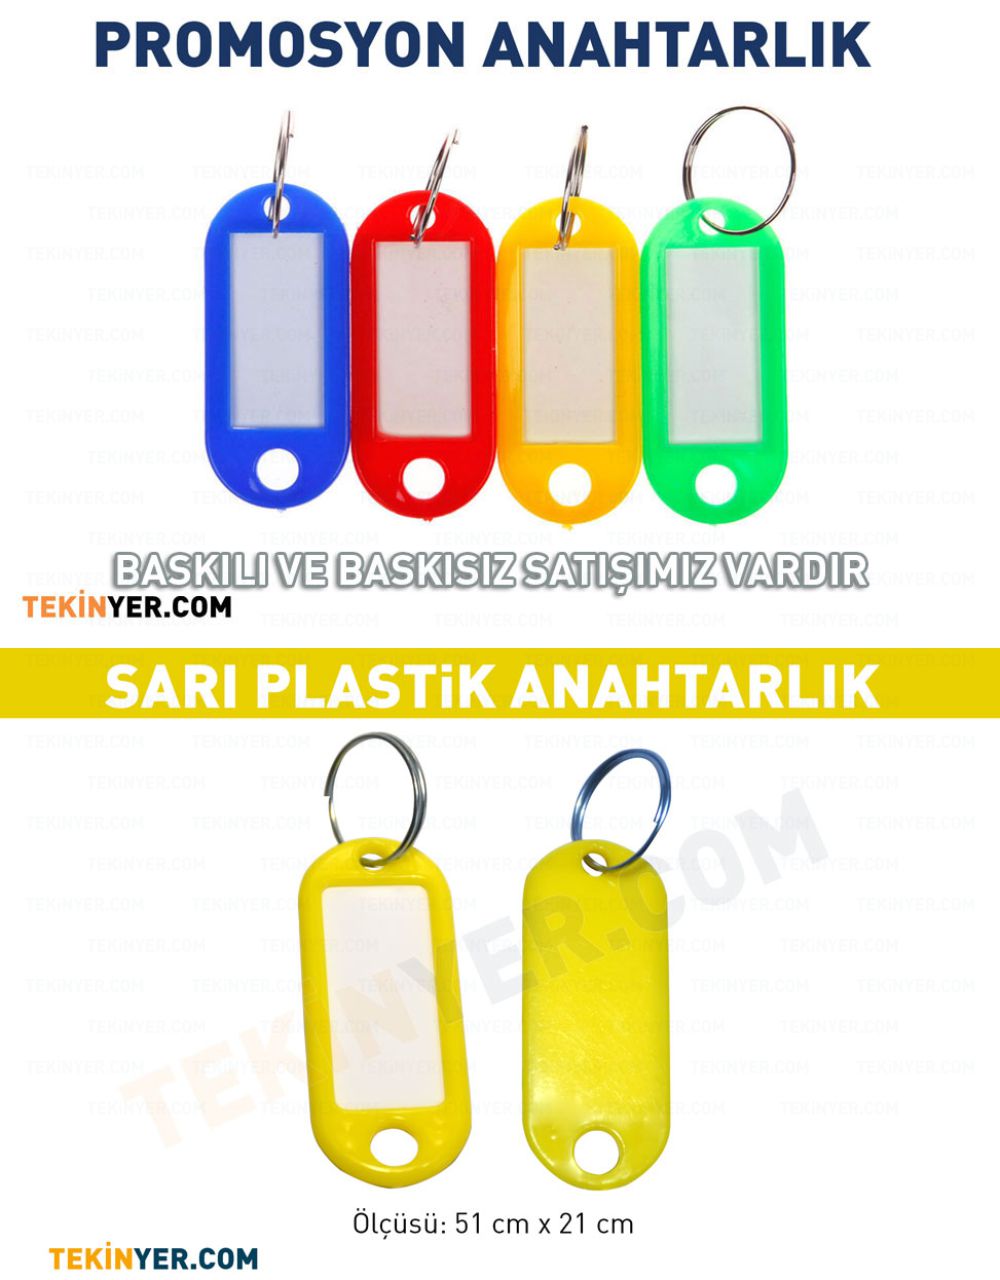 Adana Plastik Anahtarlık Malzemesi